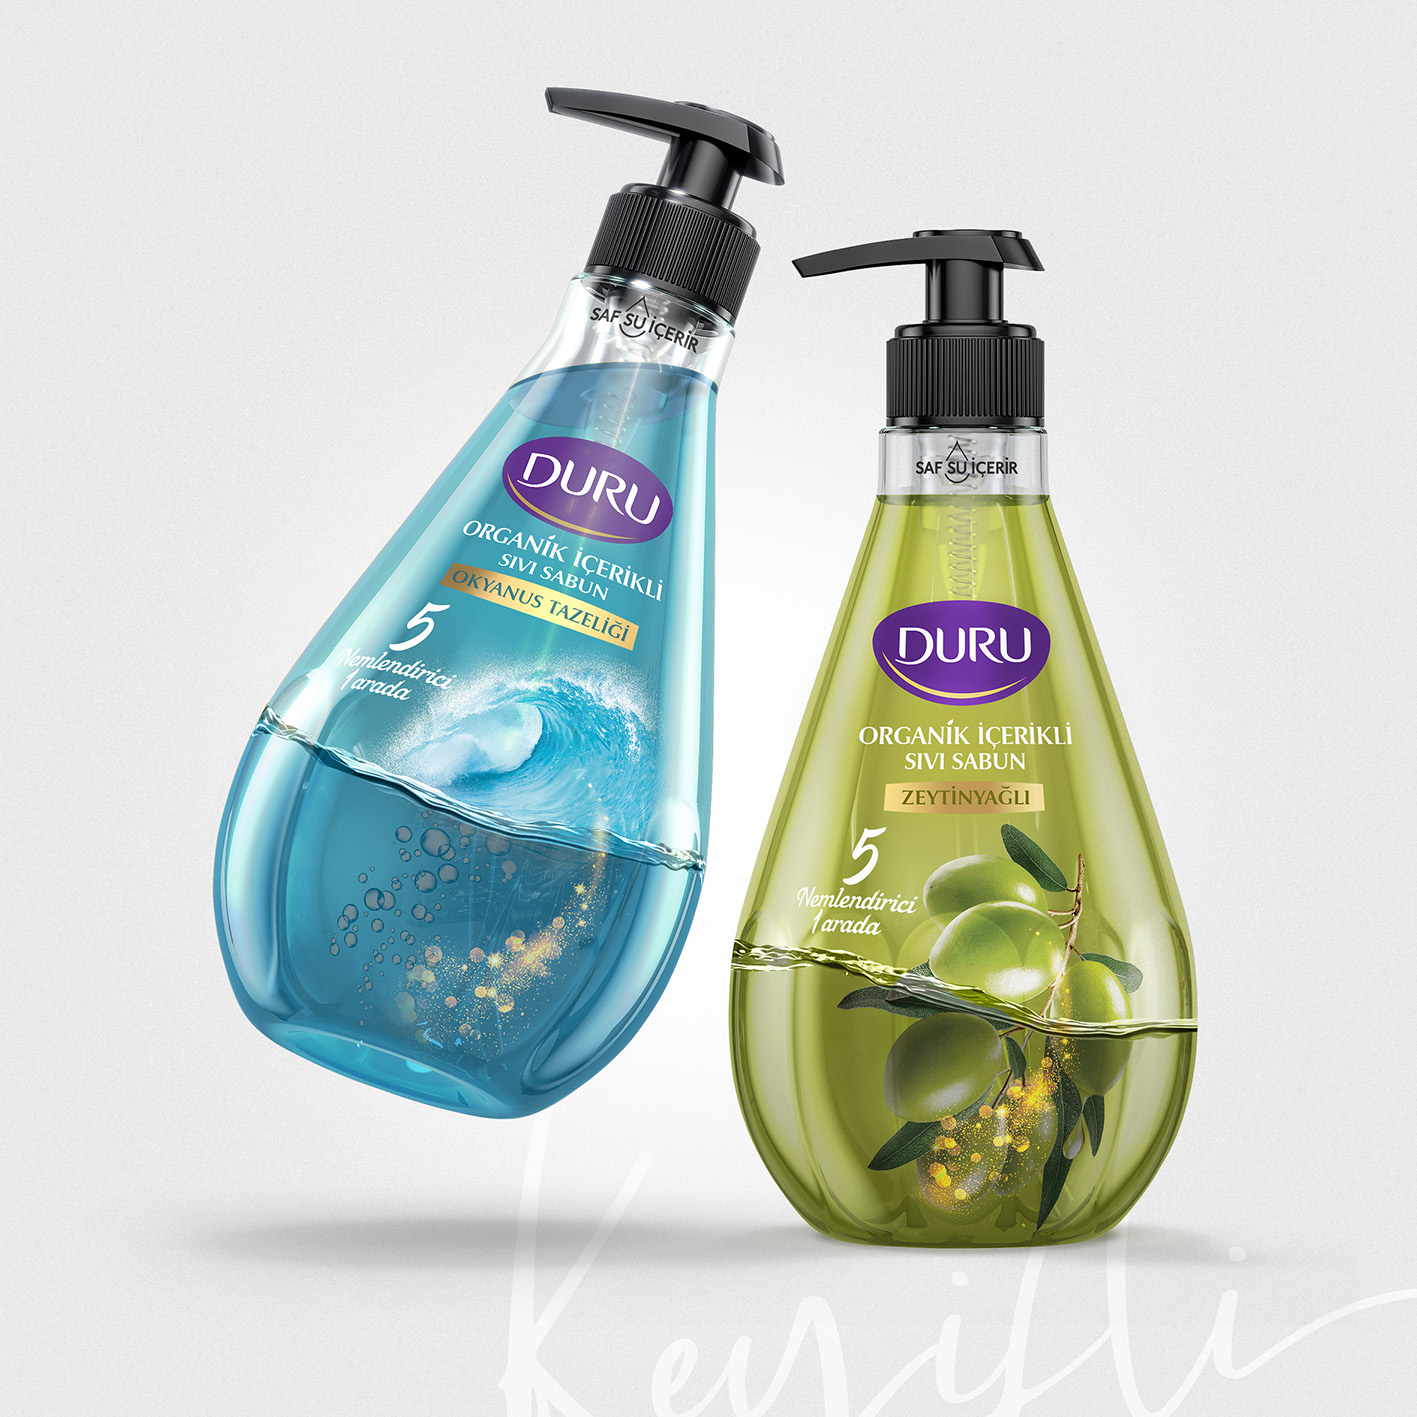 Packaging Design For Duru Organic Liquid Soap By Keyifli Fikirler Packaging & Design